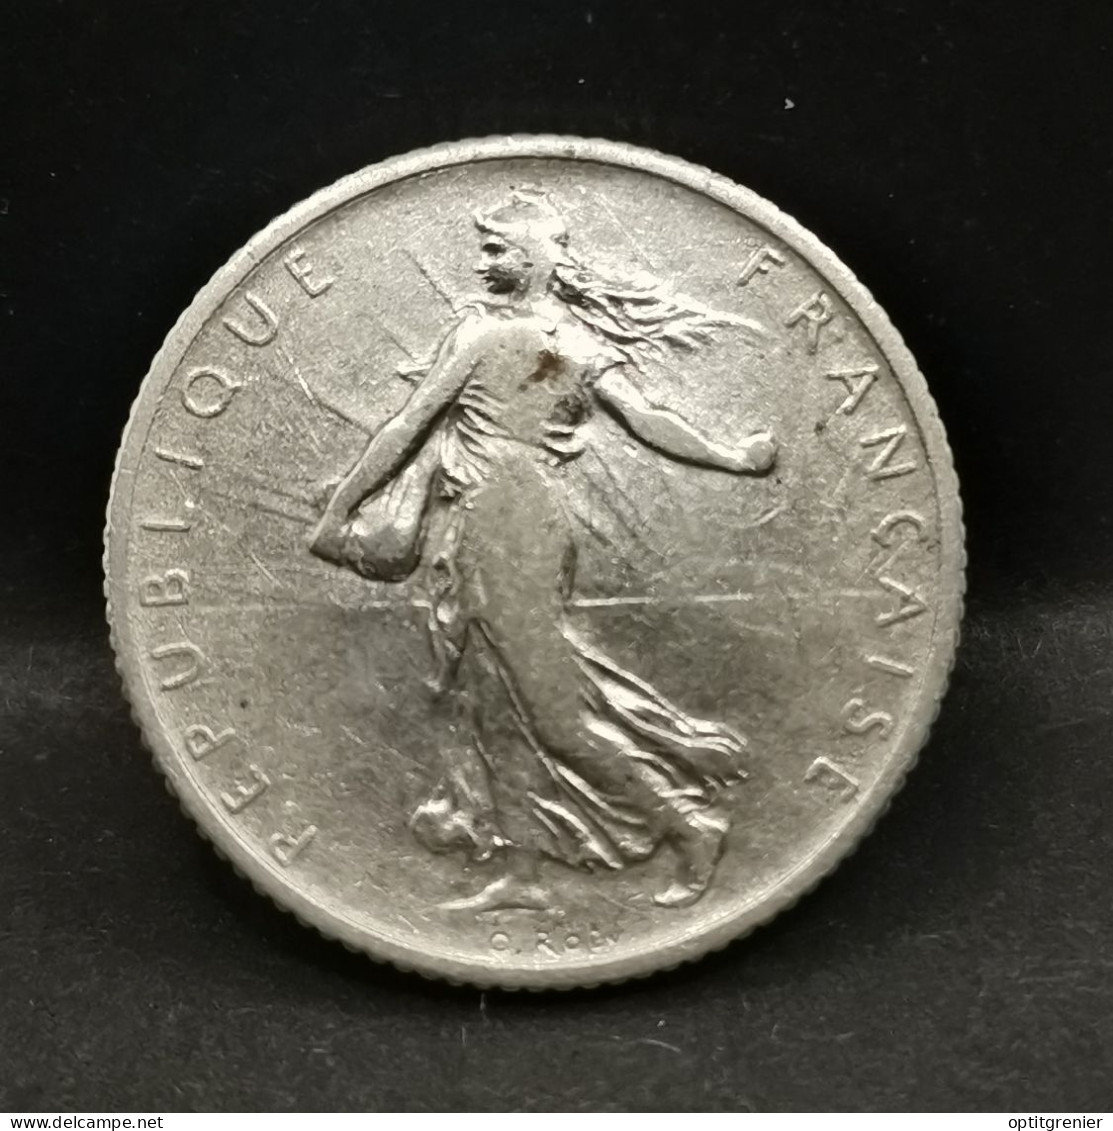 1 FRANC SEMEUSE ARGENT 1912 FRANCE / SILVER (Réf. 24425) - 1 Franc